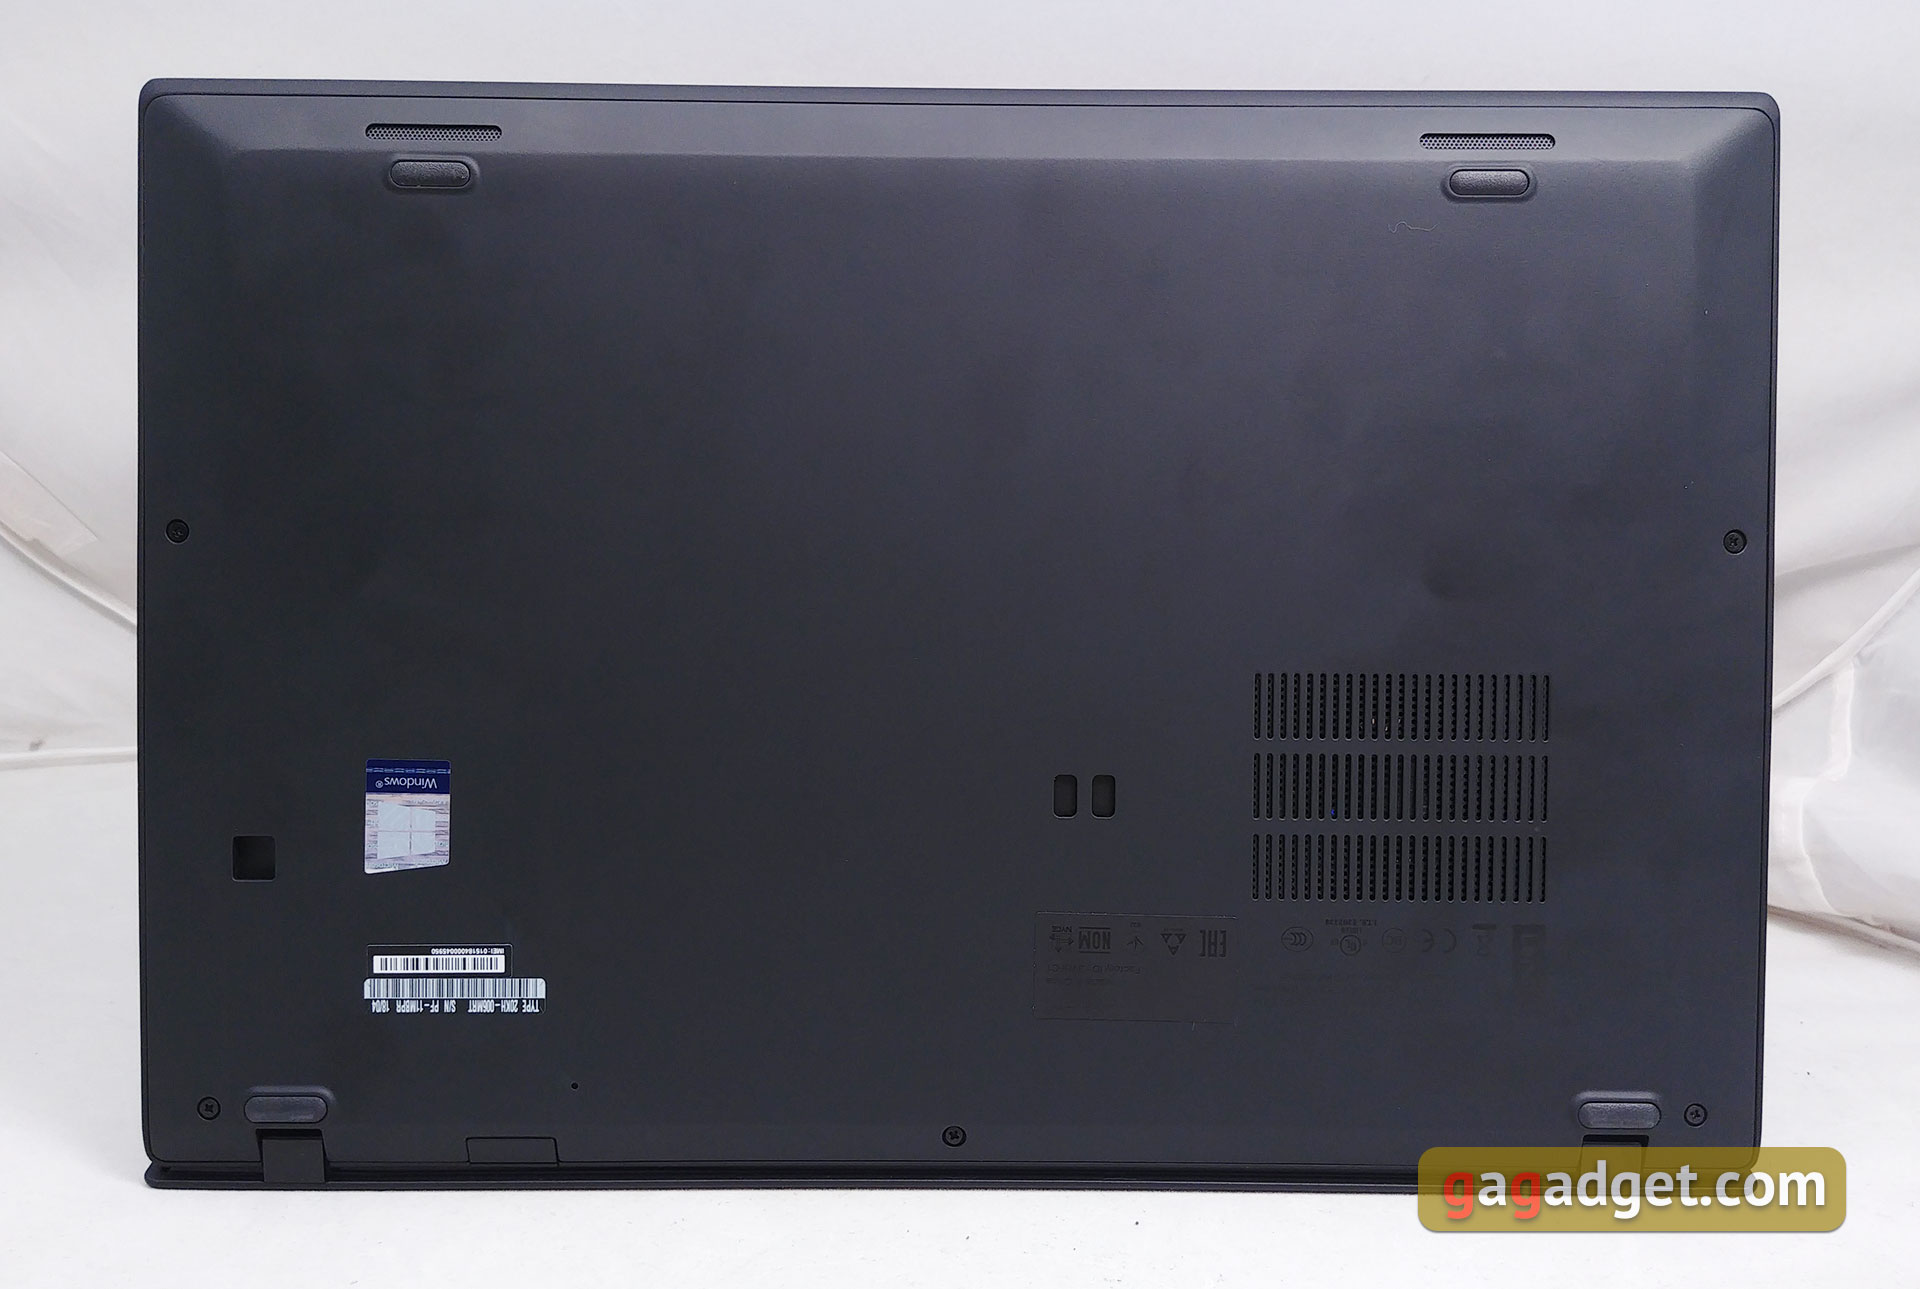 Обзор Lenovo ThinkPad X1 Carbon 6th Gen: топовый бизнес-ультрабук с HDR-экраном-17